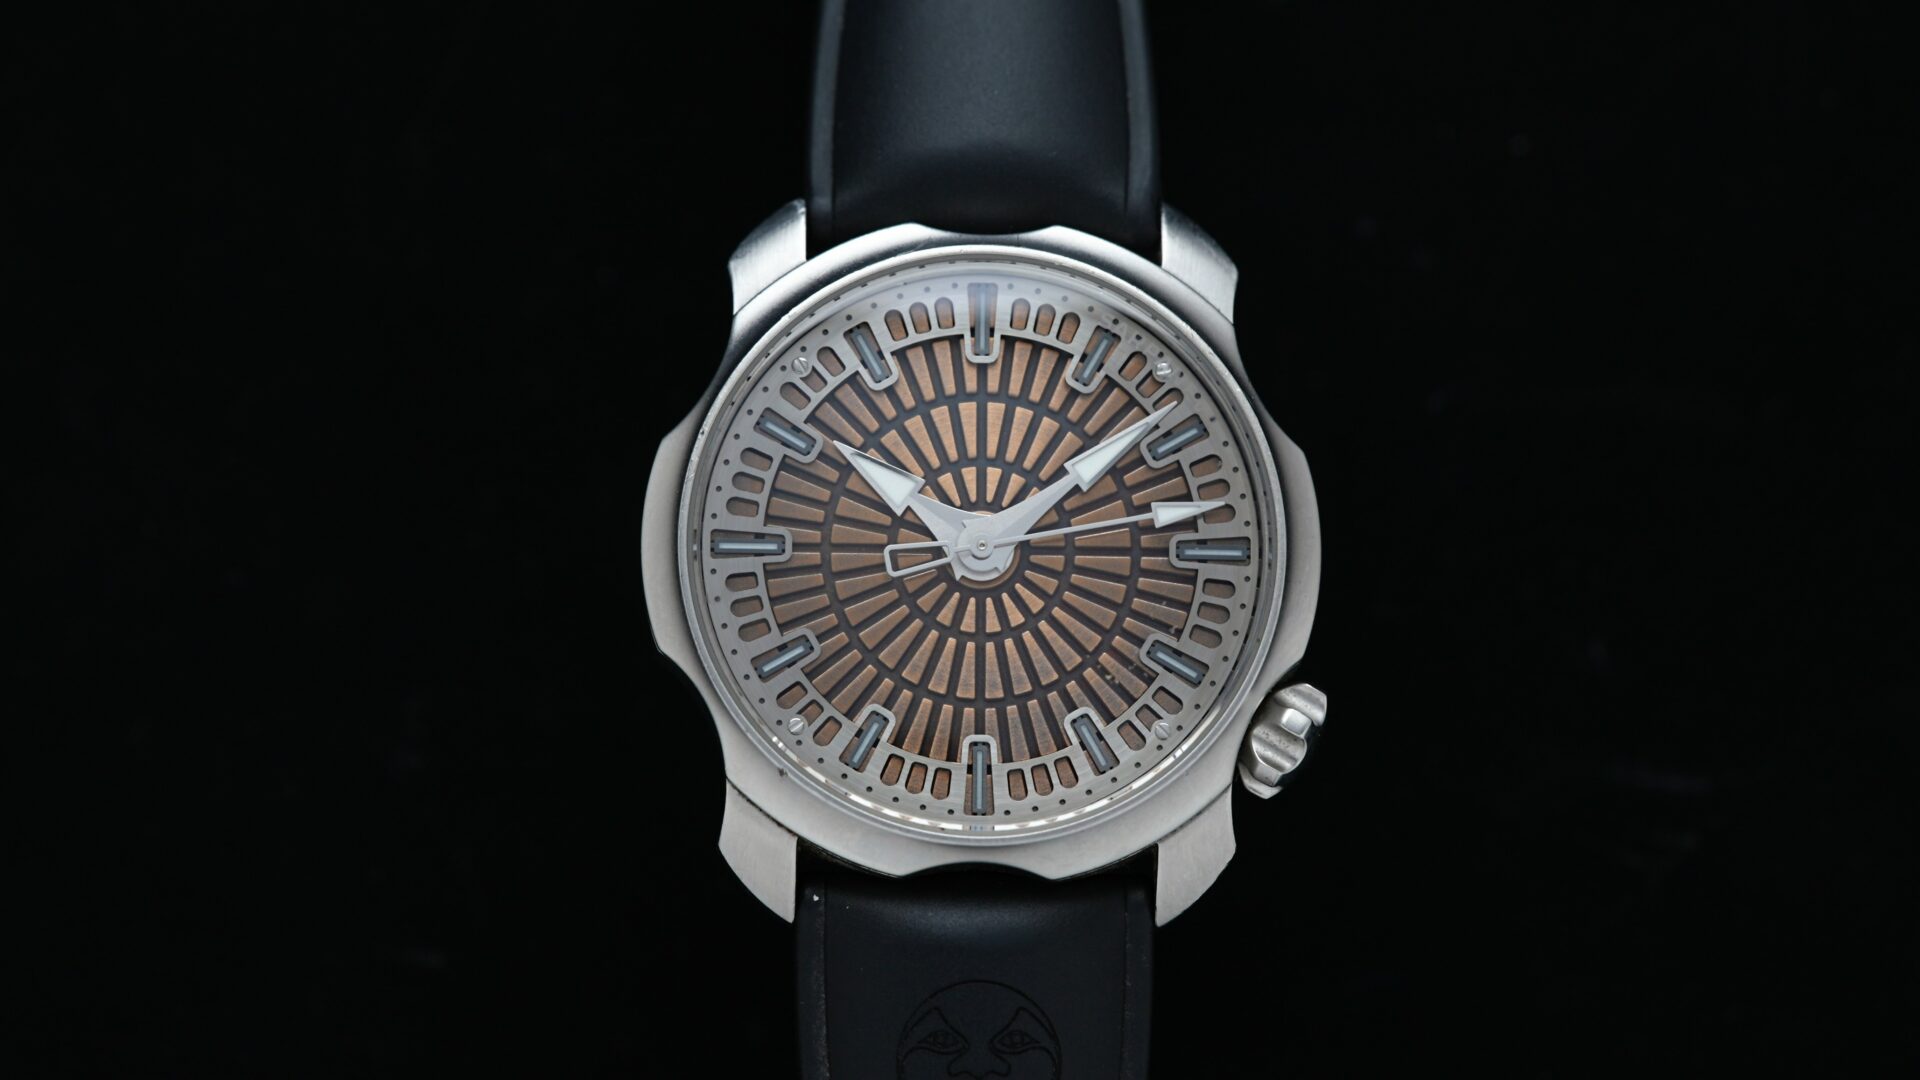 Sarpaneva Super1 bronze dial watch featured under white lighting.